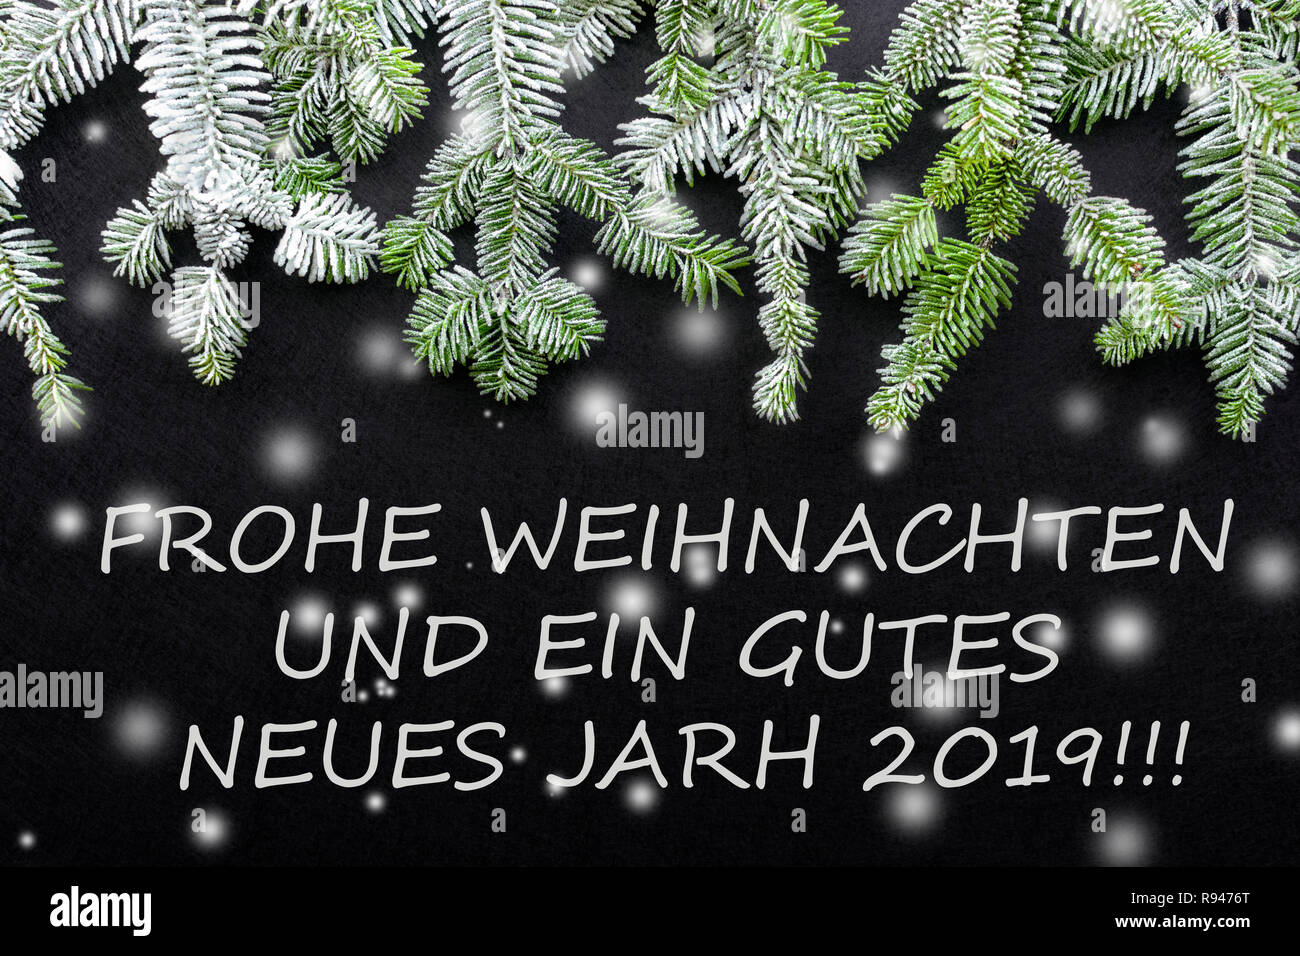 Fir tree and snow on dark background. Greetings Christmas card. Postcard. Christmastime. White and green.' frohe weihnachten und ein gutes neues jahr  Stock Photo